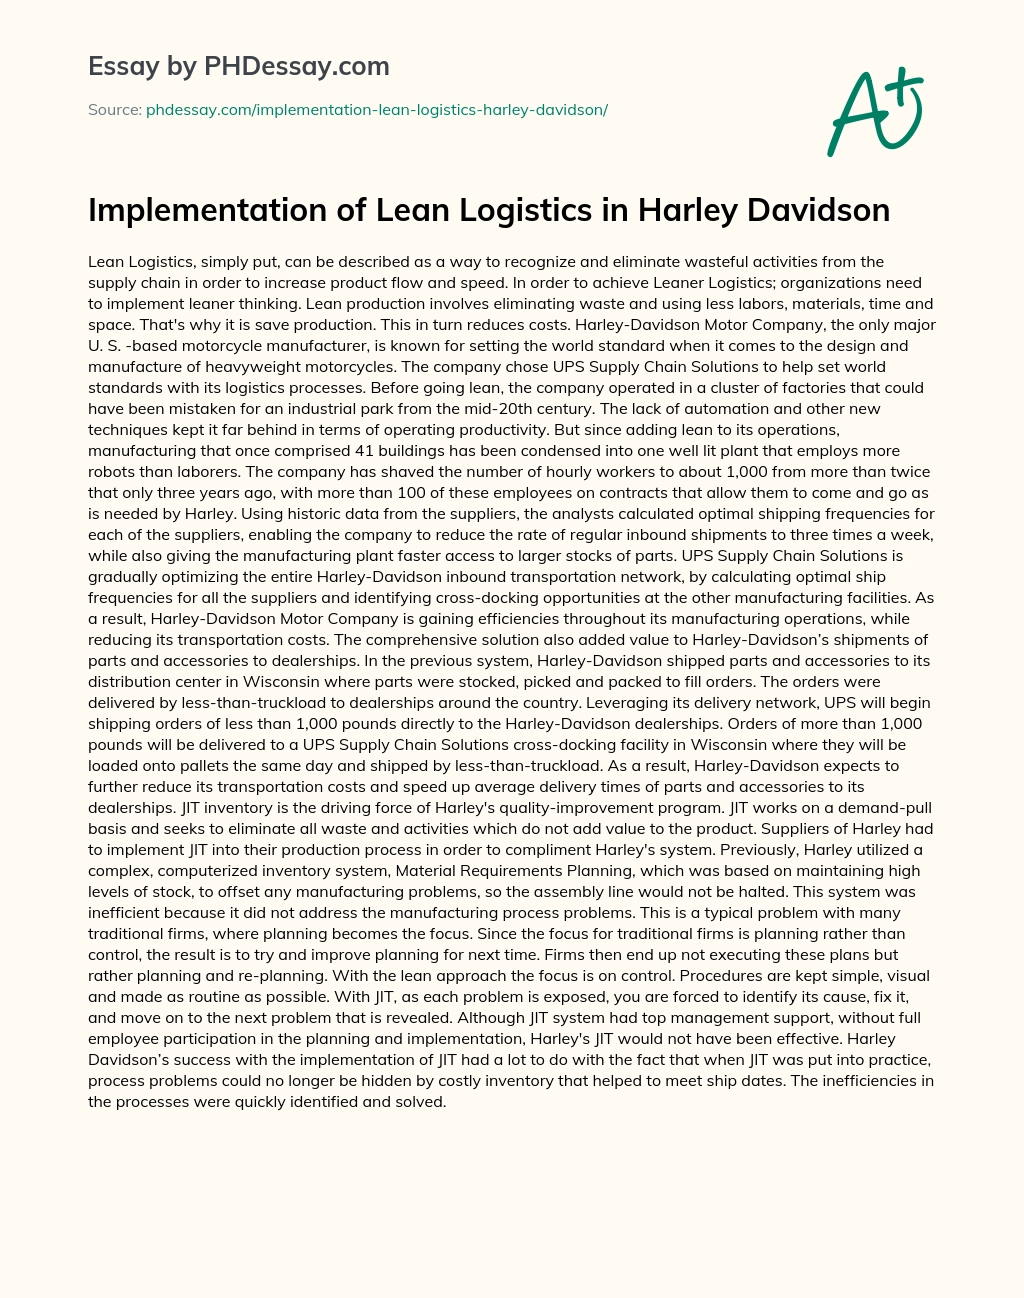 Implementation of Lean Logistics in Harley Davidson essay